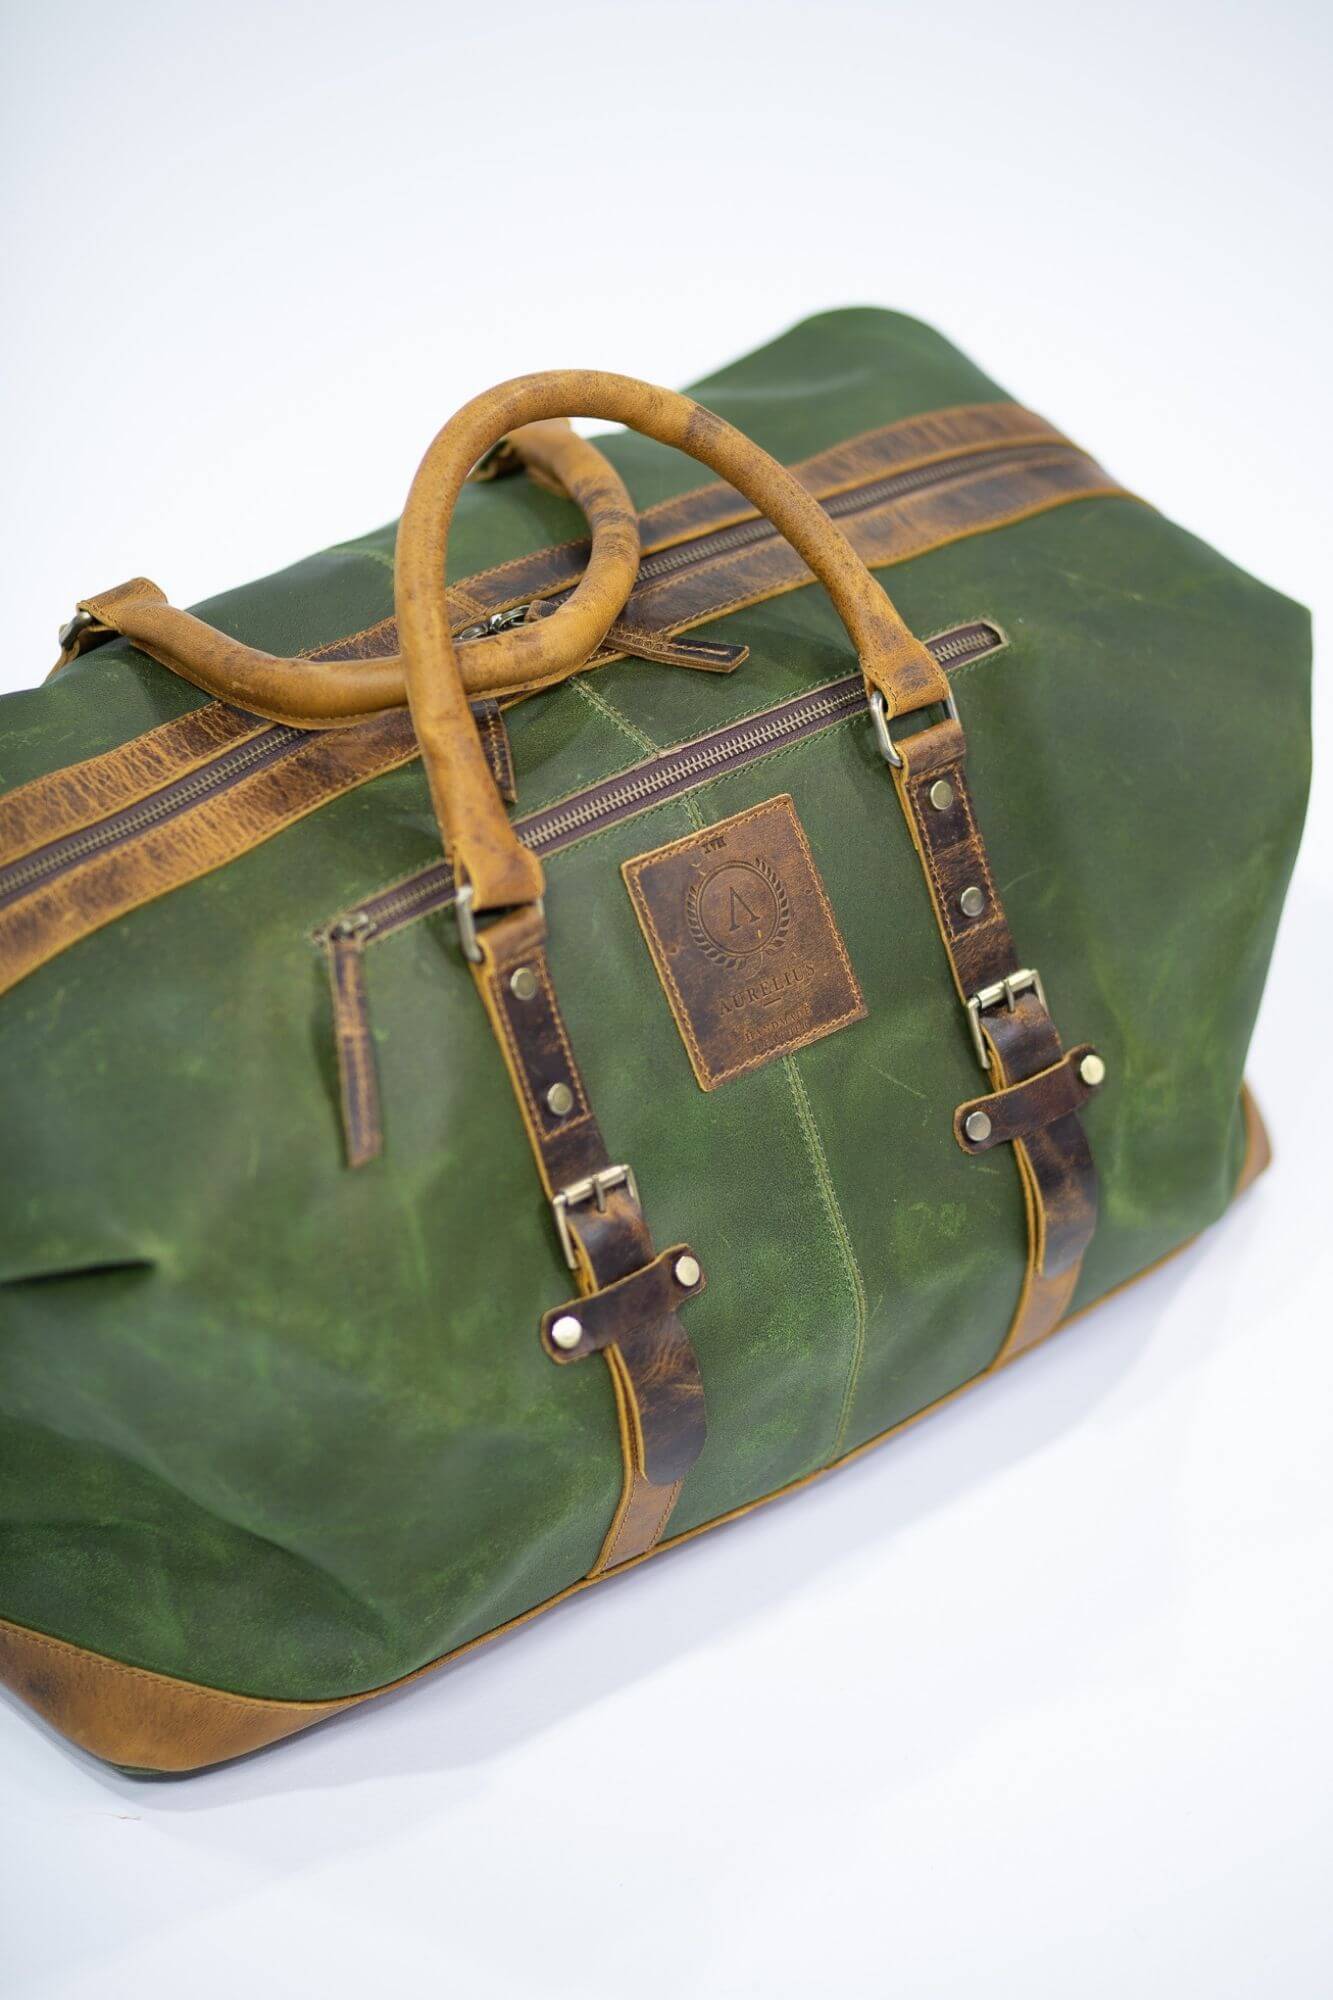 Aurelius Leather Leather Bag Leather Bag Package Malinor Bundle Package